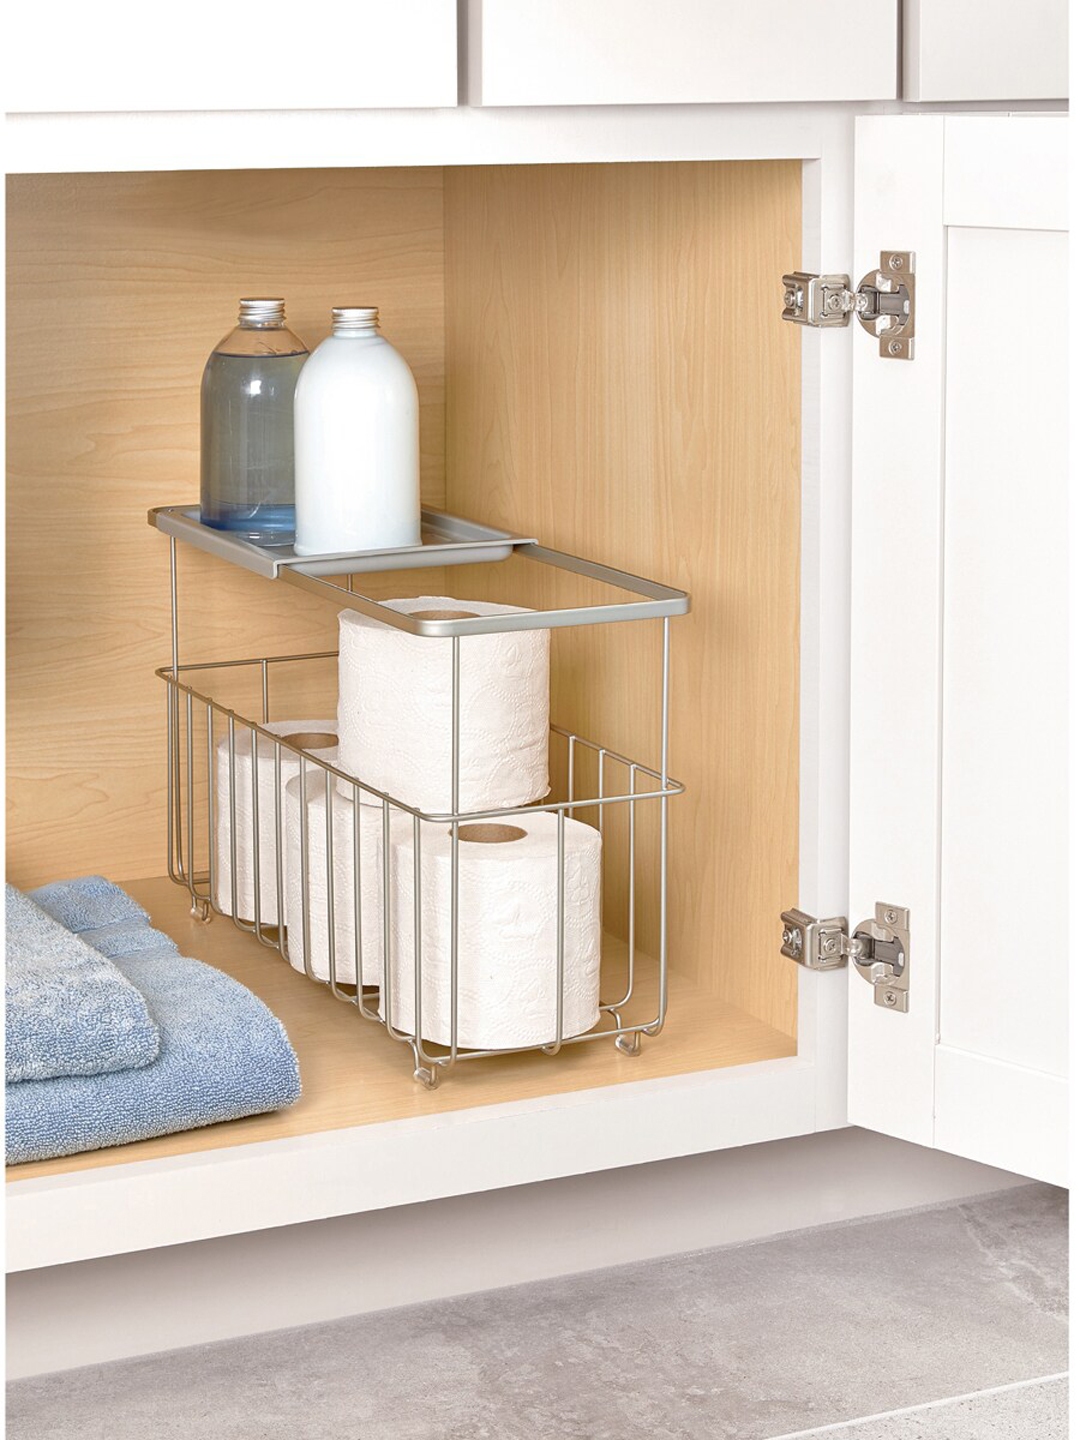 INTERDESIGN Silver Toned Solid Storage Basket With Shelf